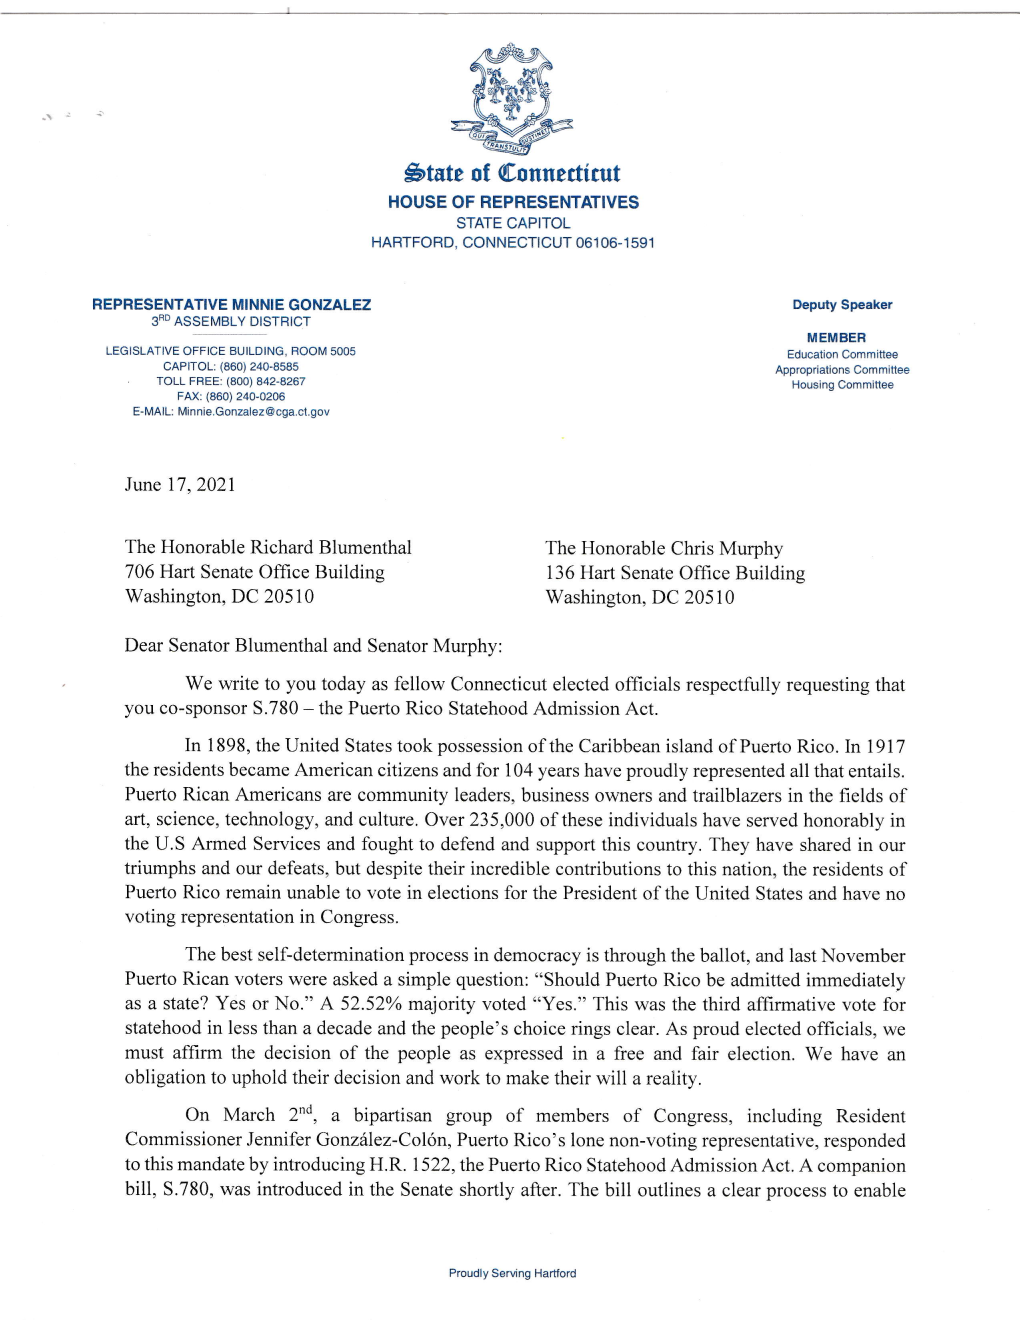 Letter to CT Senators